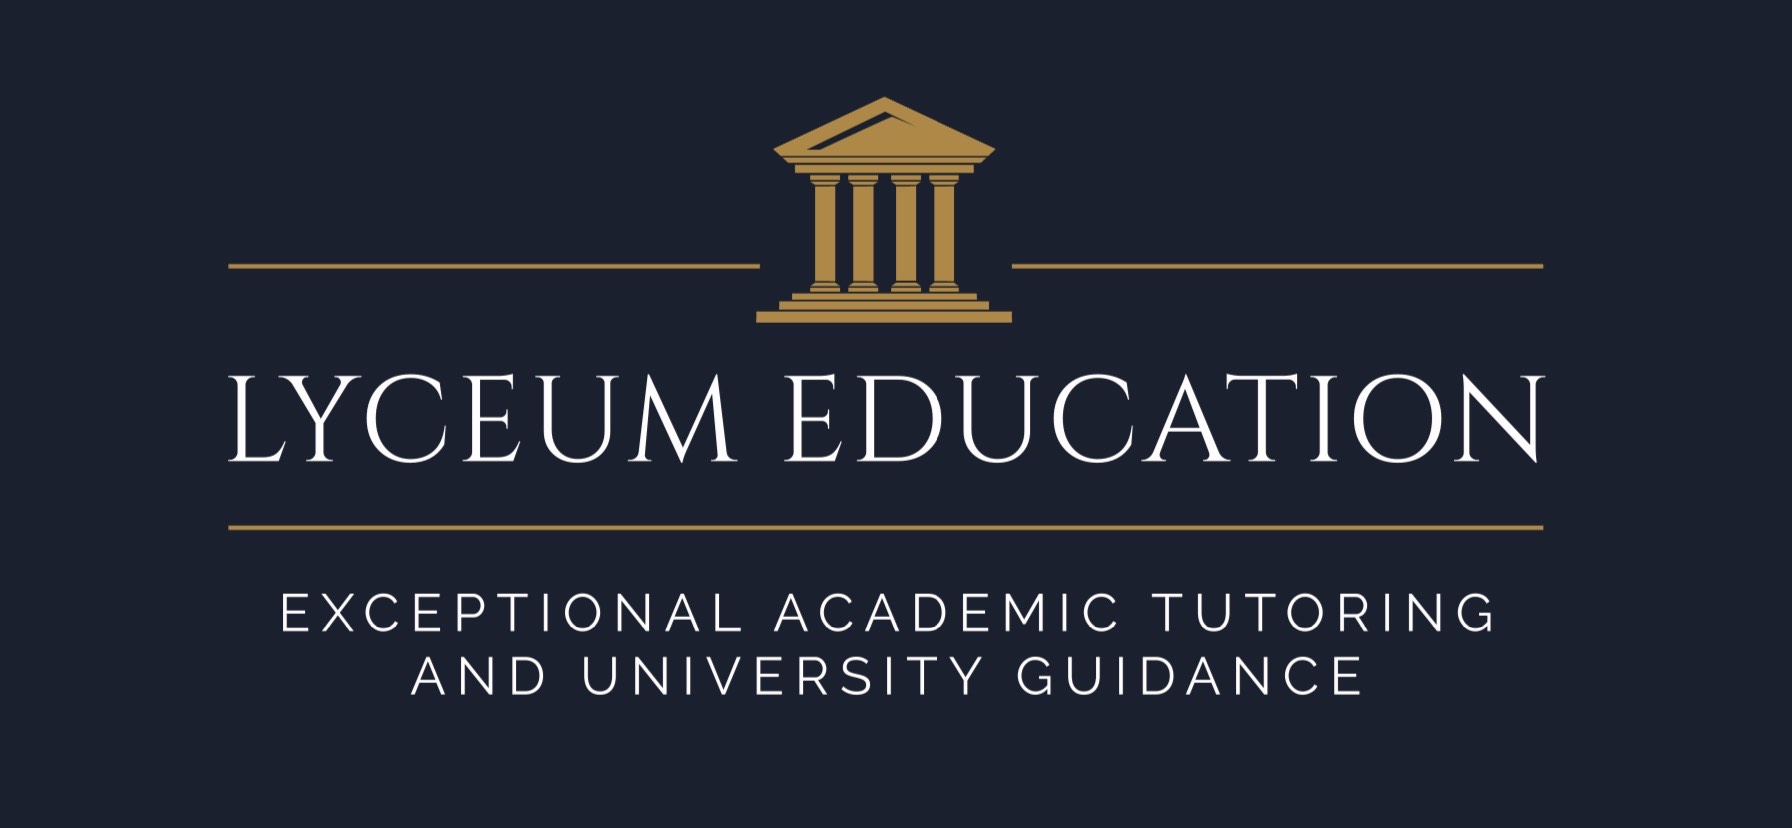 Lyceum Education